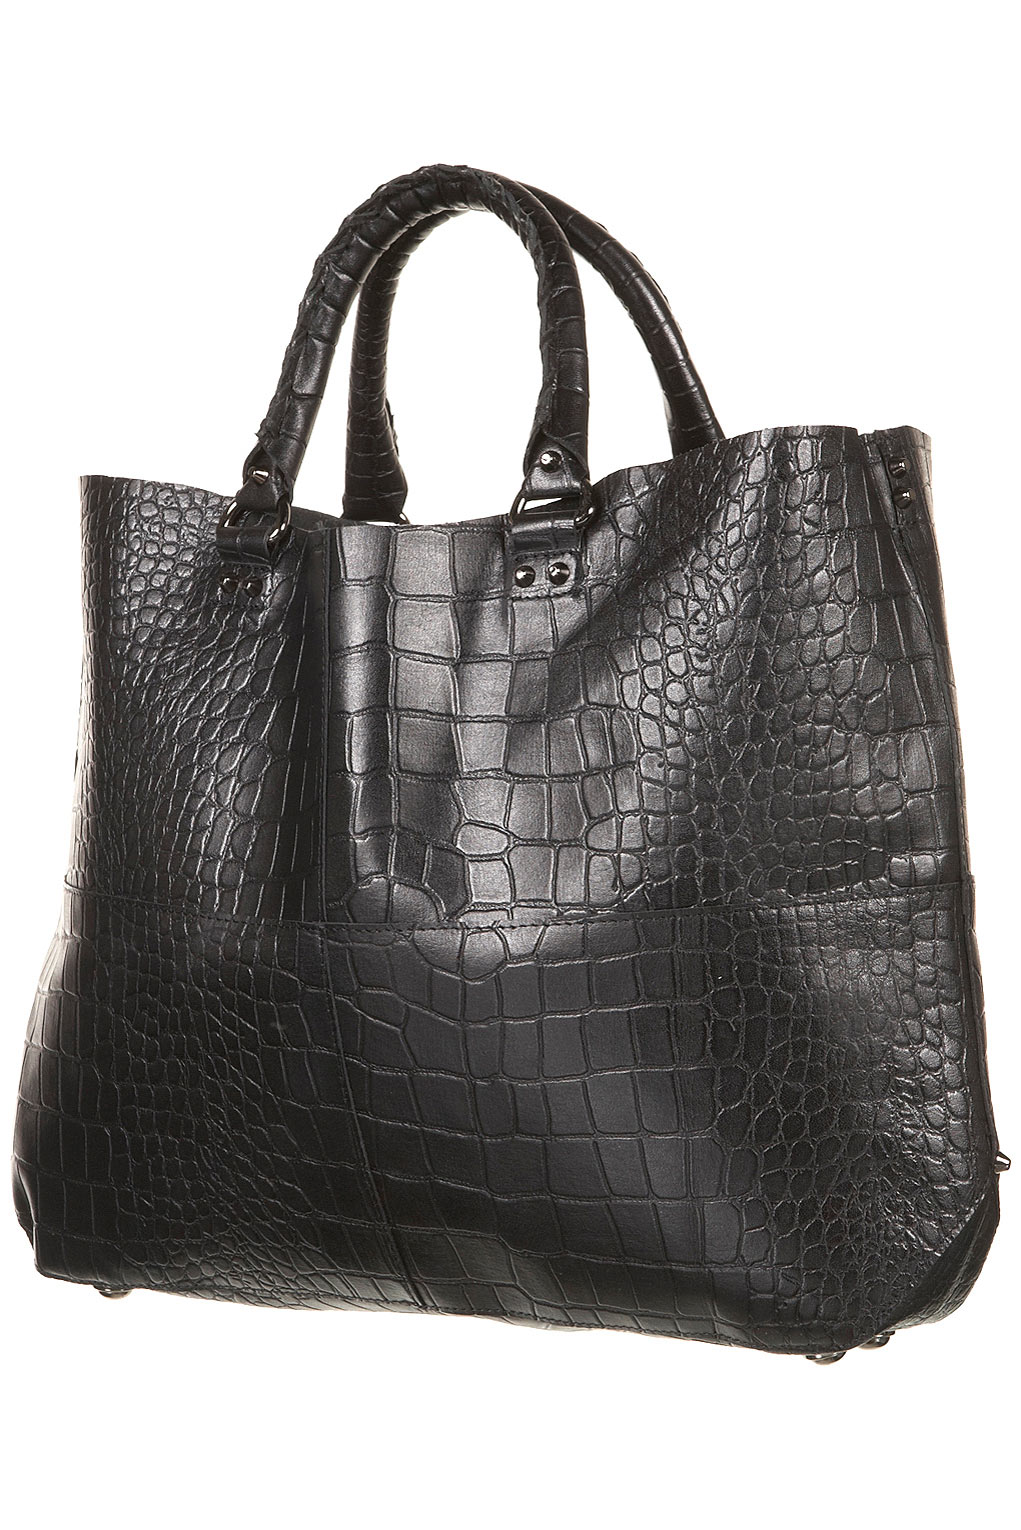 Topshop Premium Croc Leather Tote Bag in Black | Lyst